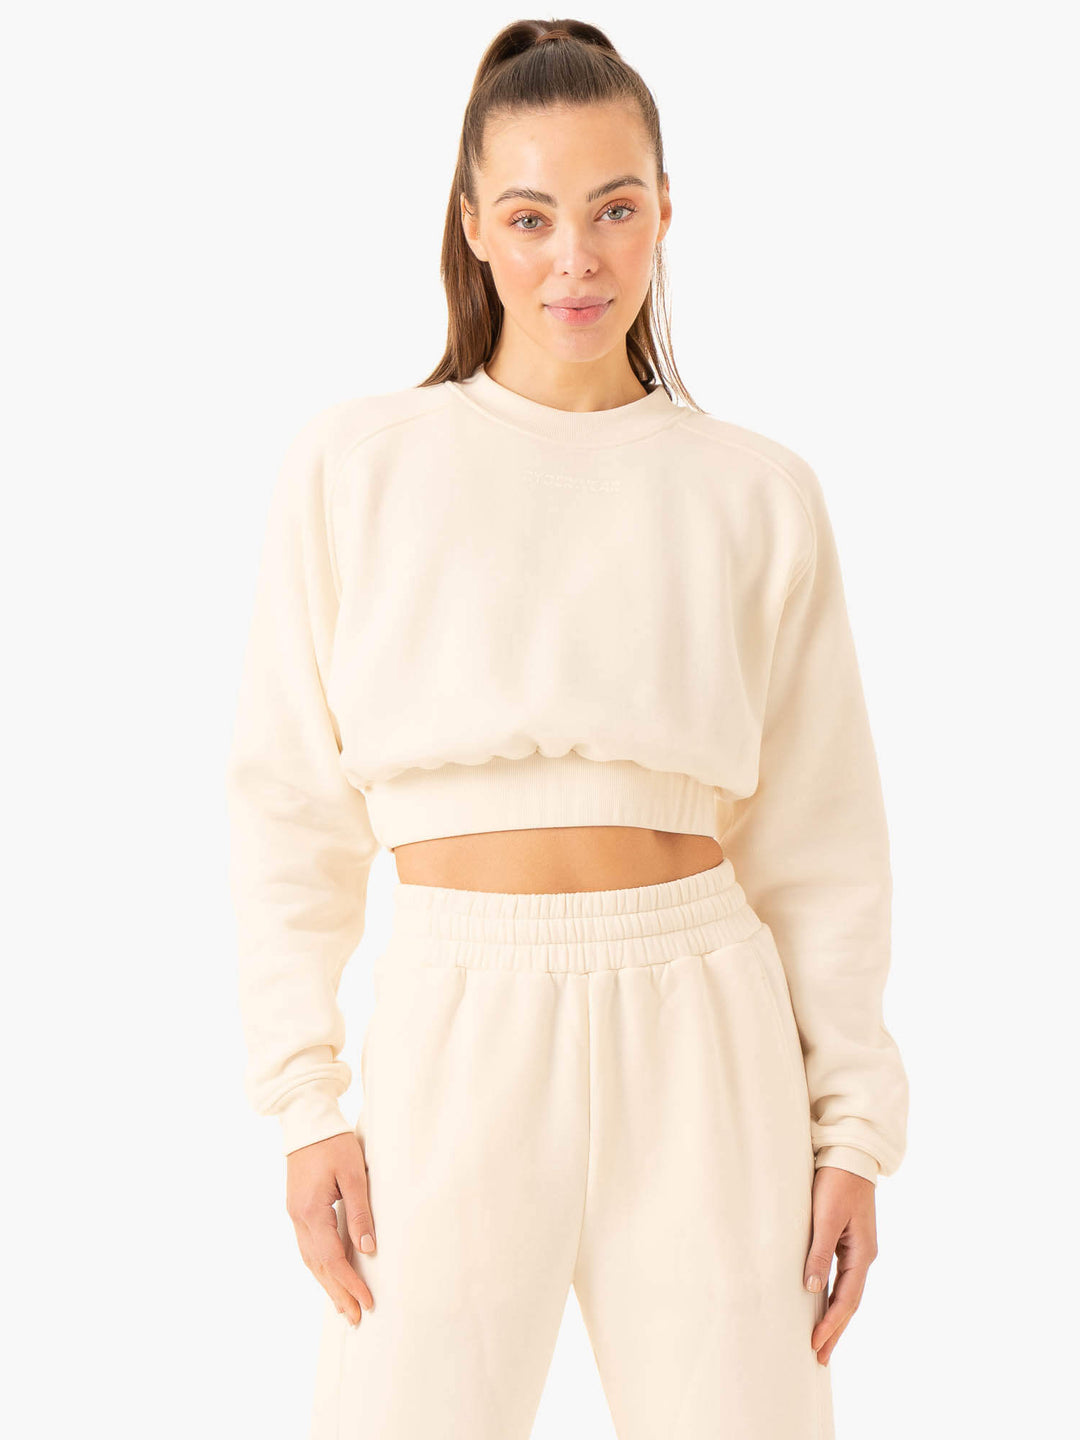 Sideline Sweater - Vanilla Clothing Ryderwear 